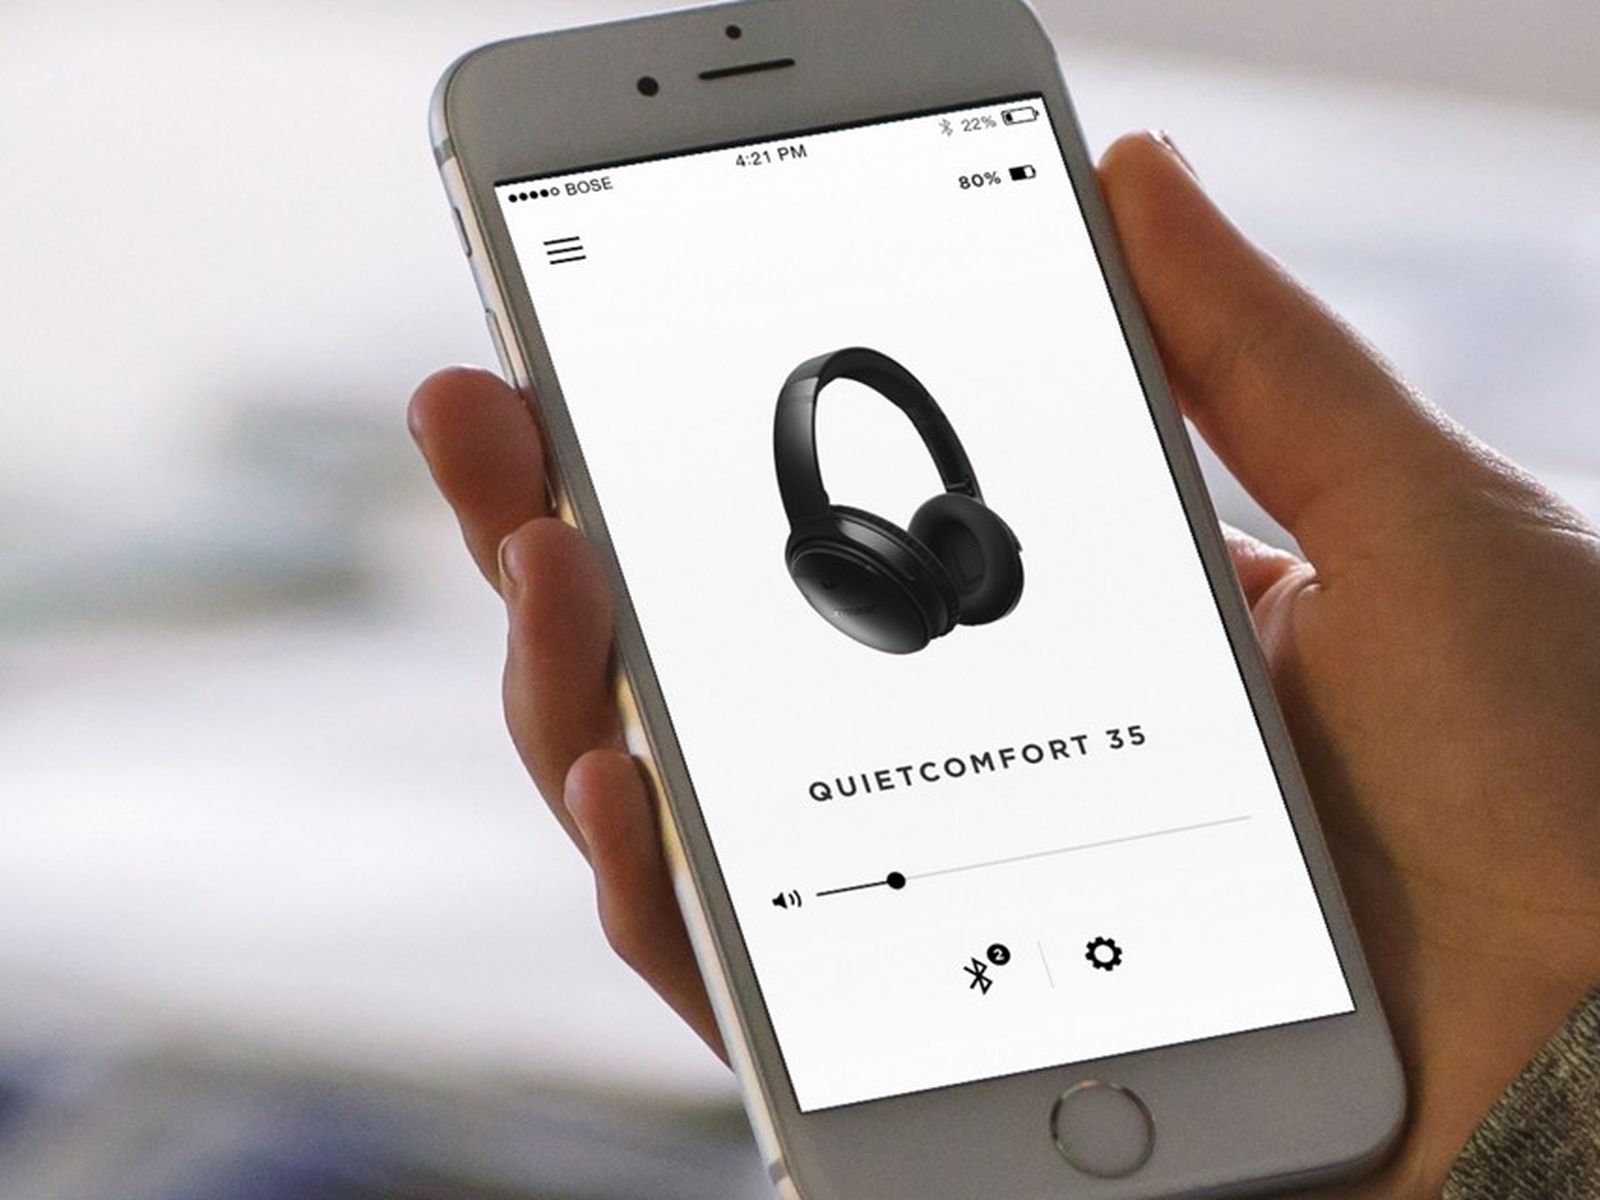 Bandit Syd lovgivning Bose Wireless Headphones Spy on Listeners, Lawsuit Alleges - MacRumors